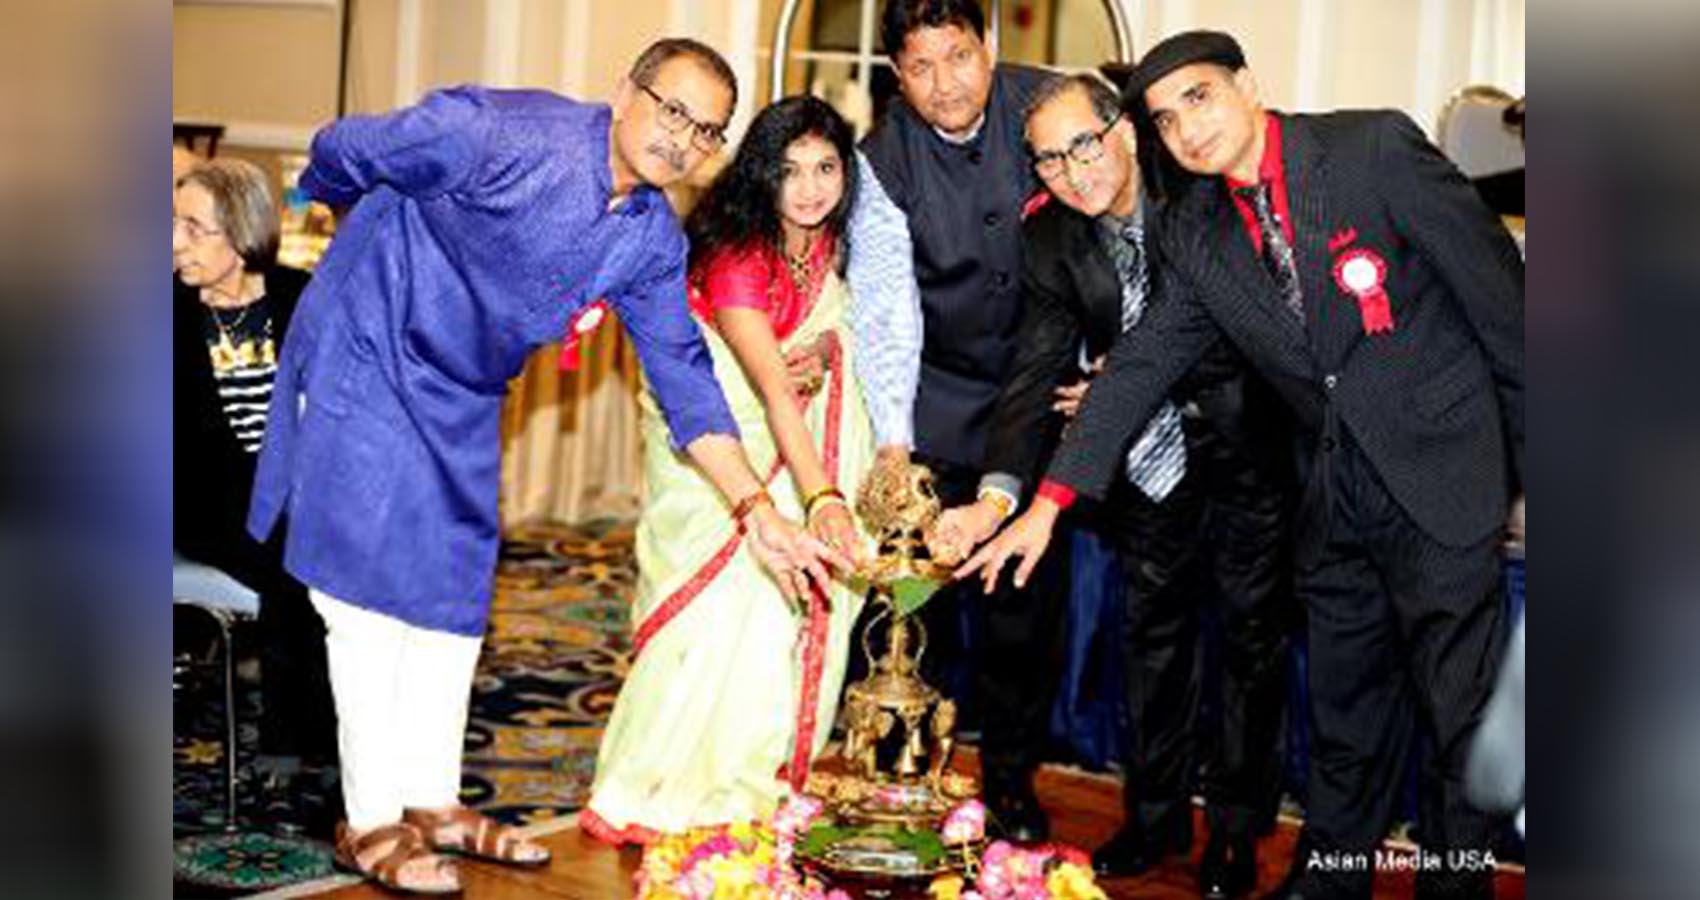 The Uttar Pradesh (UP) Association of Greater Chicago  Celebrates Diwali traditional way